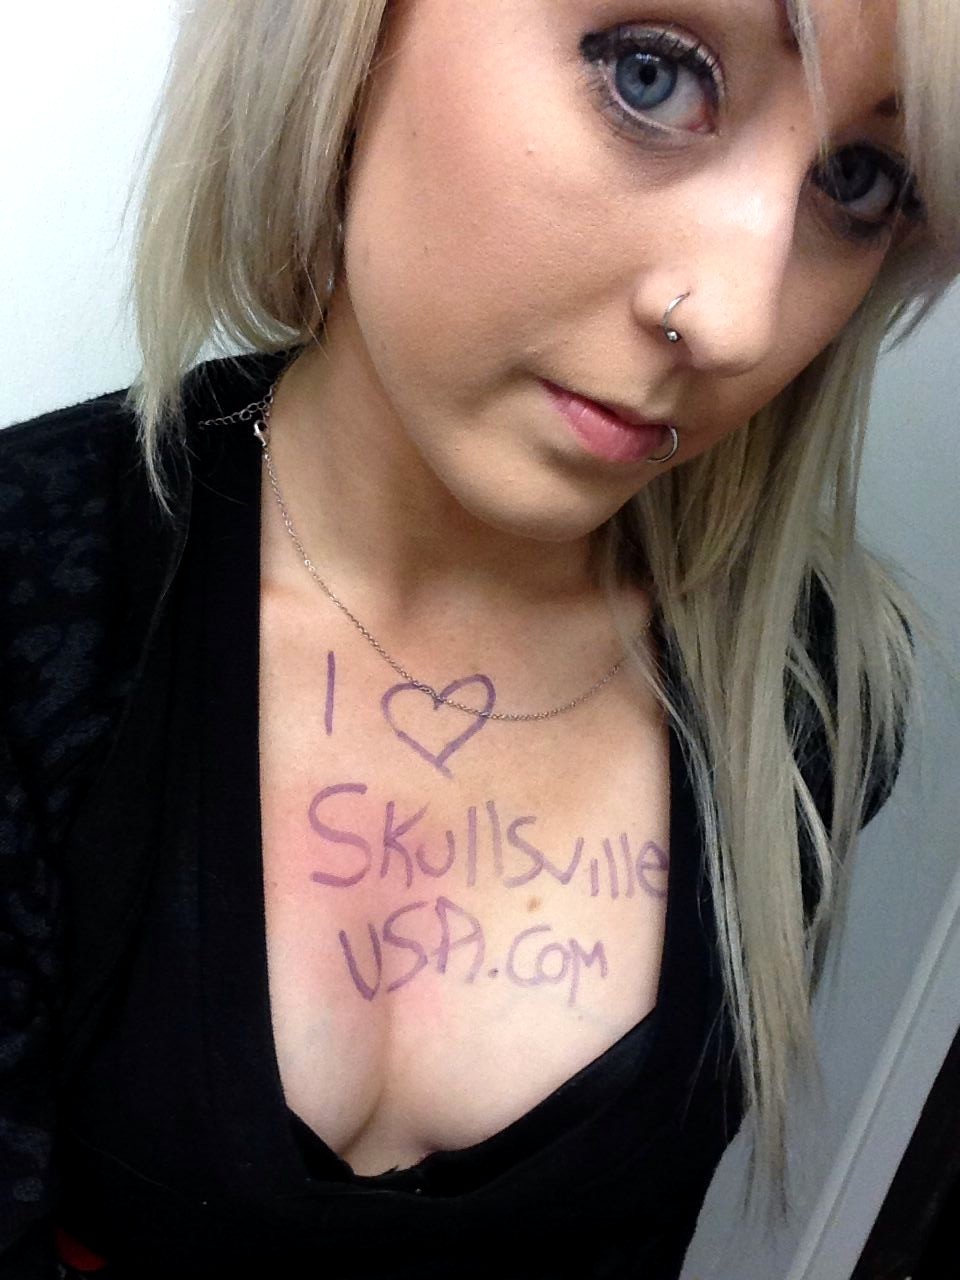 skullsvilleusa fan selfie